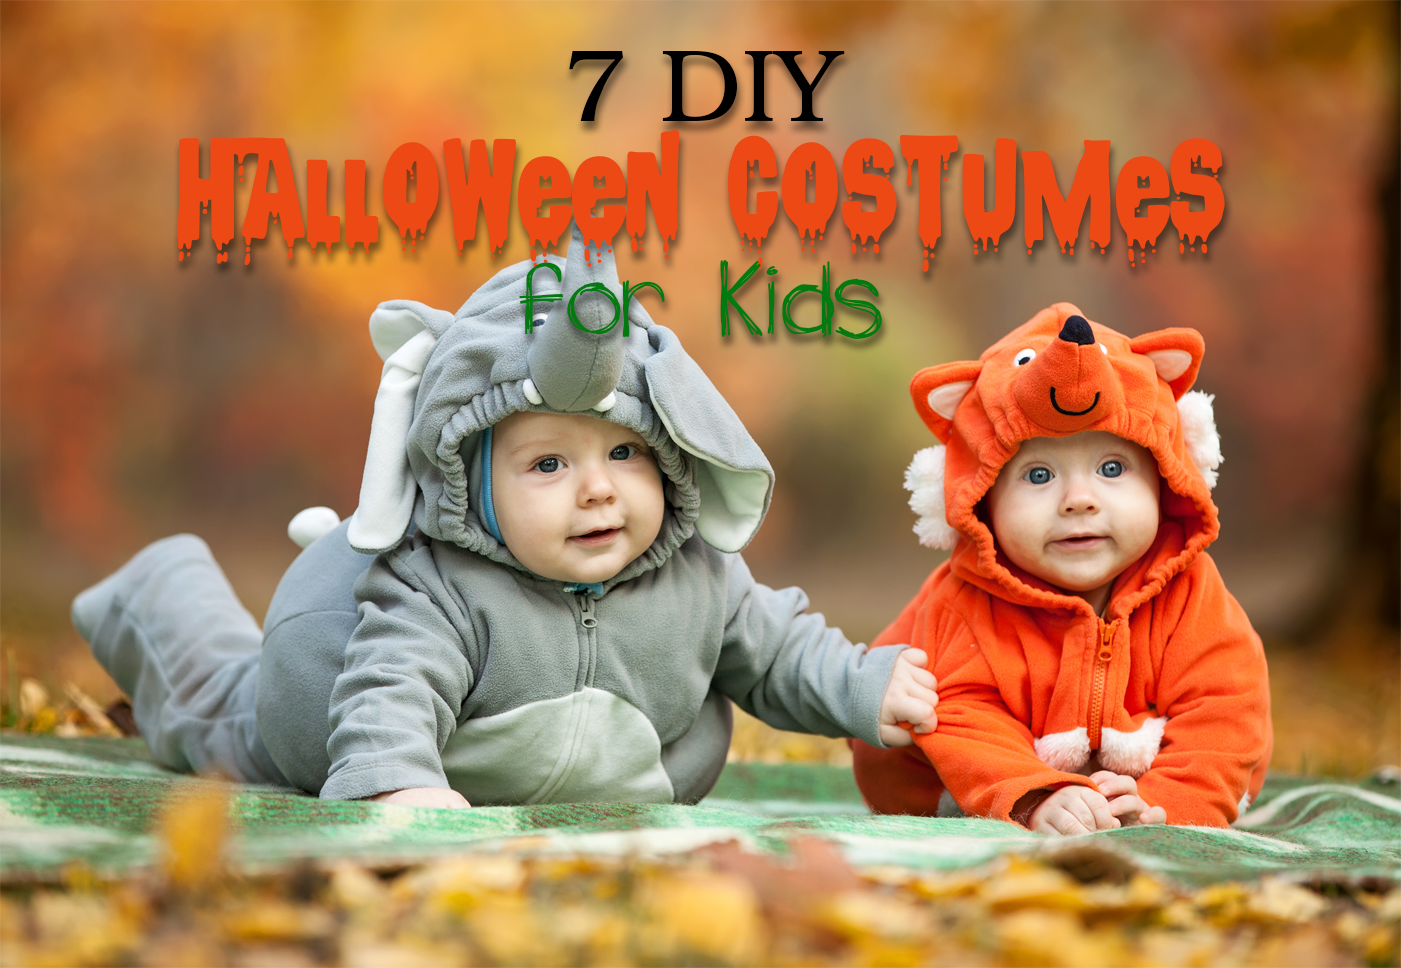 7 DIY Halloween Costumes for Kids